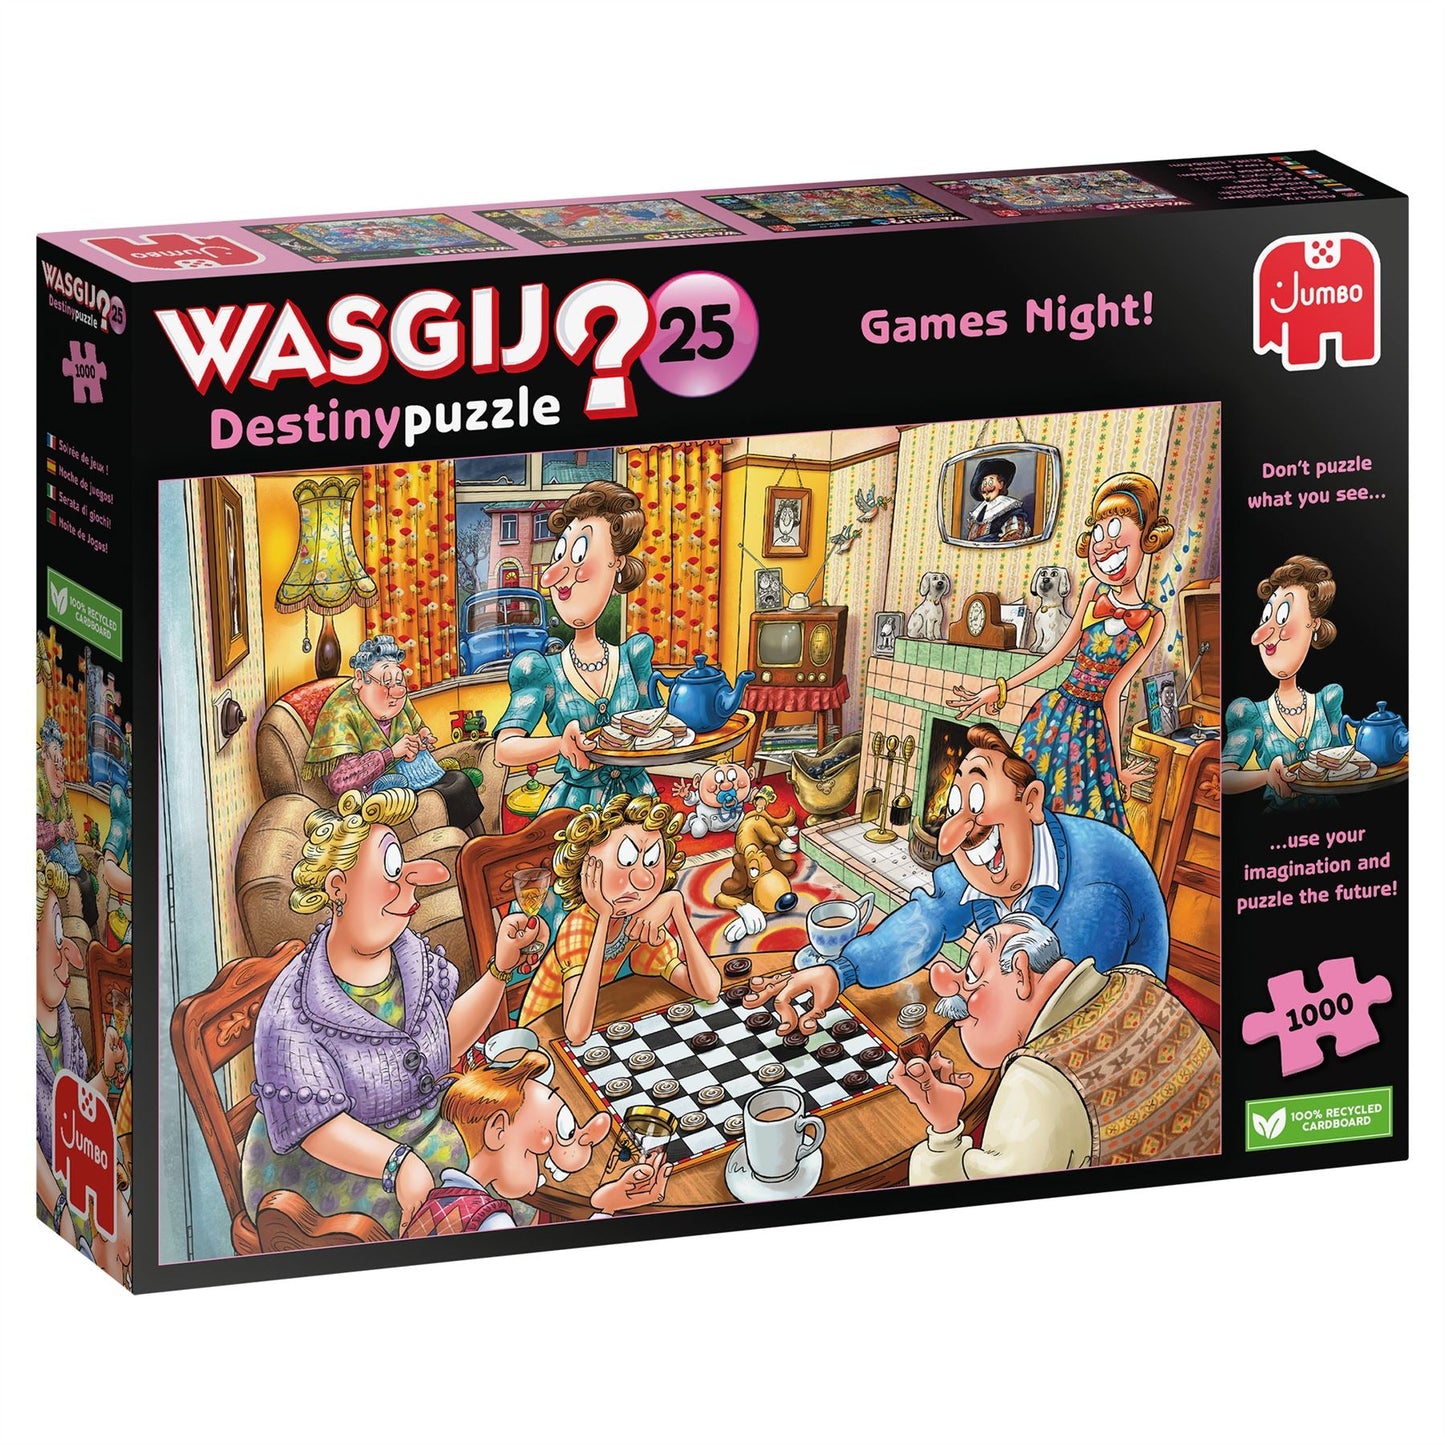 Wasgij Destiny 25 Games Night! 1000 Piece Jigsaw Puzzle – All